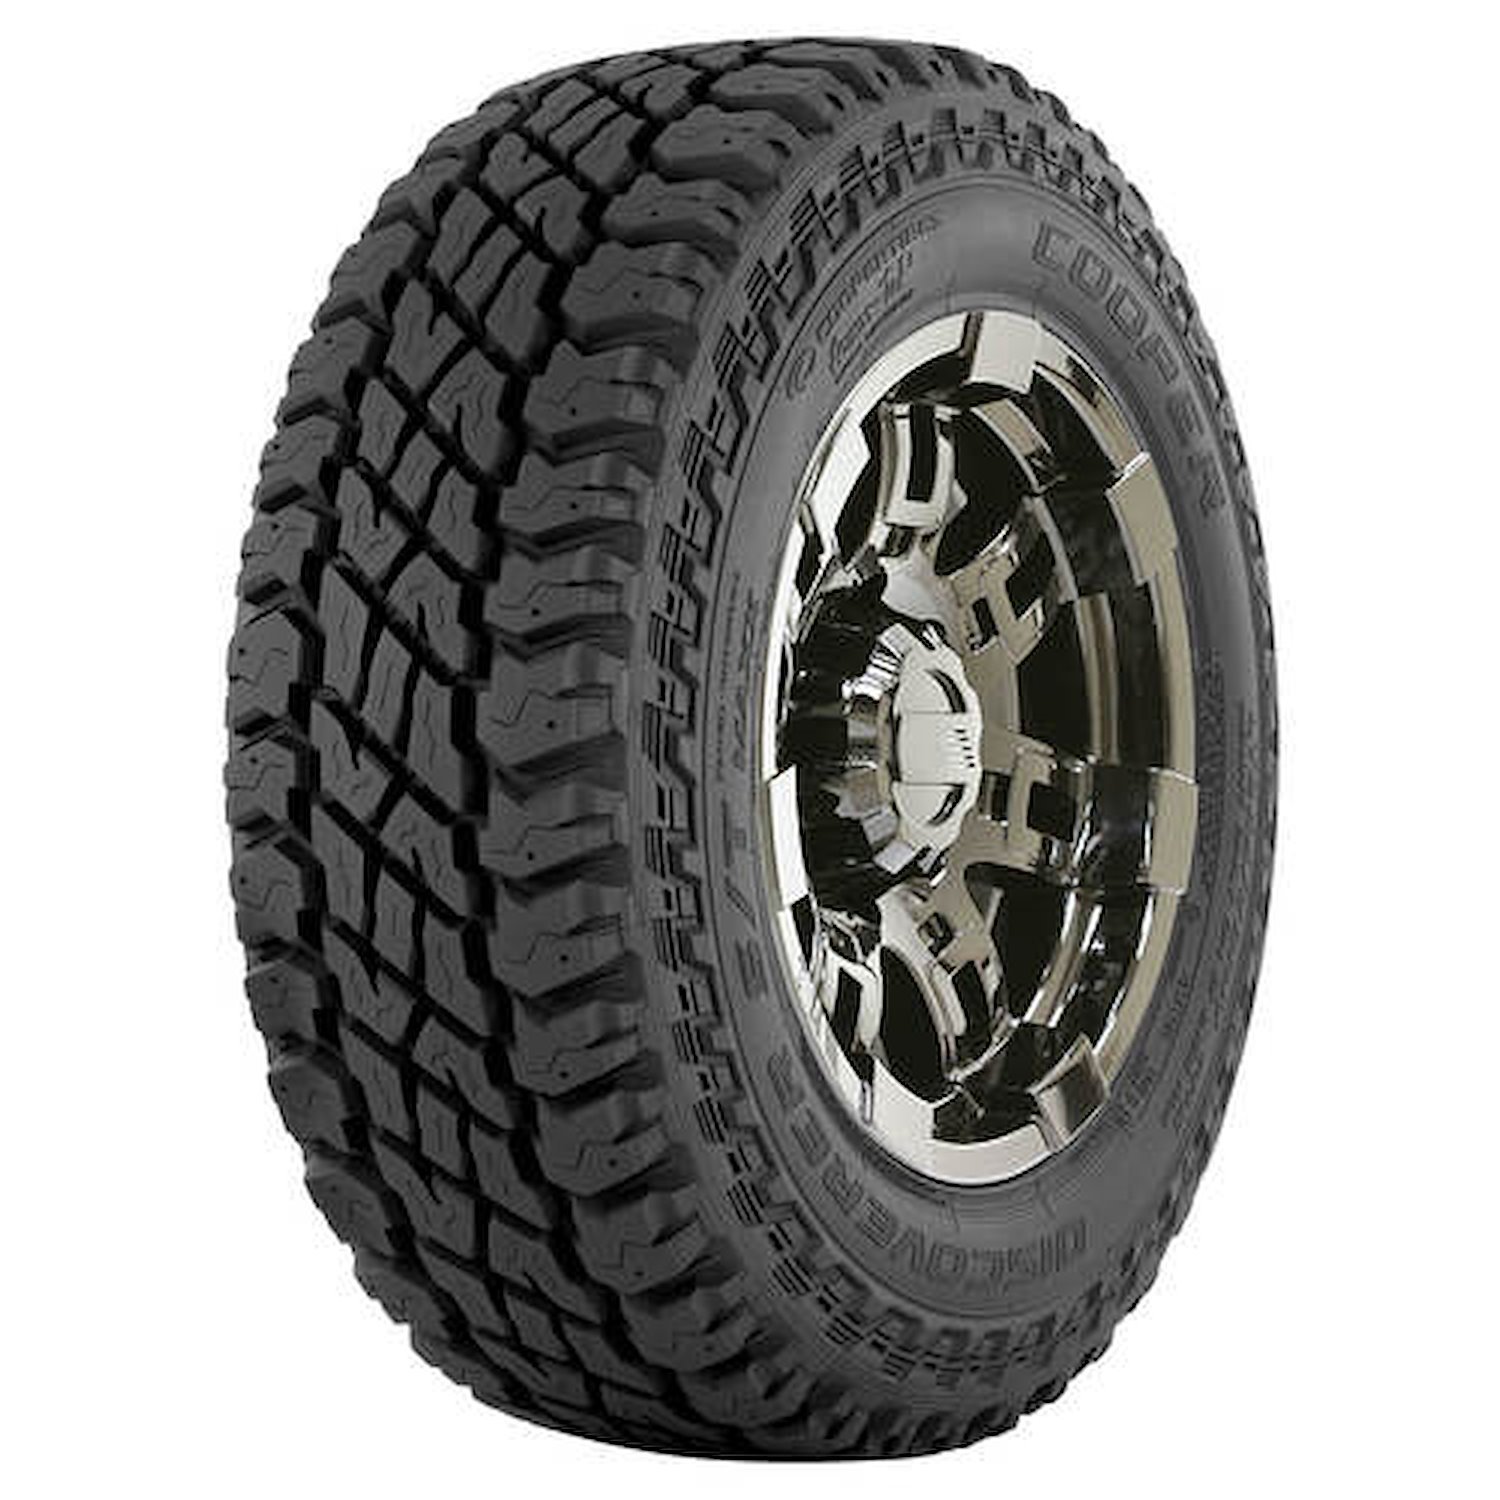 Discoverer S/T Maxx All-Terrain Tire, LT295/70R18